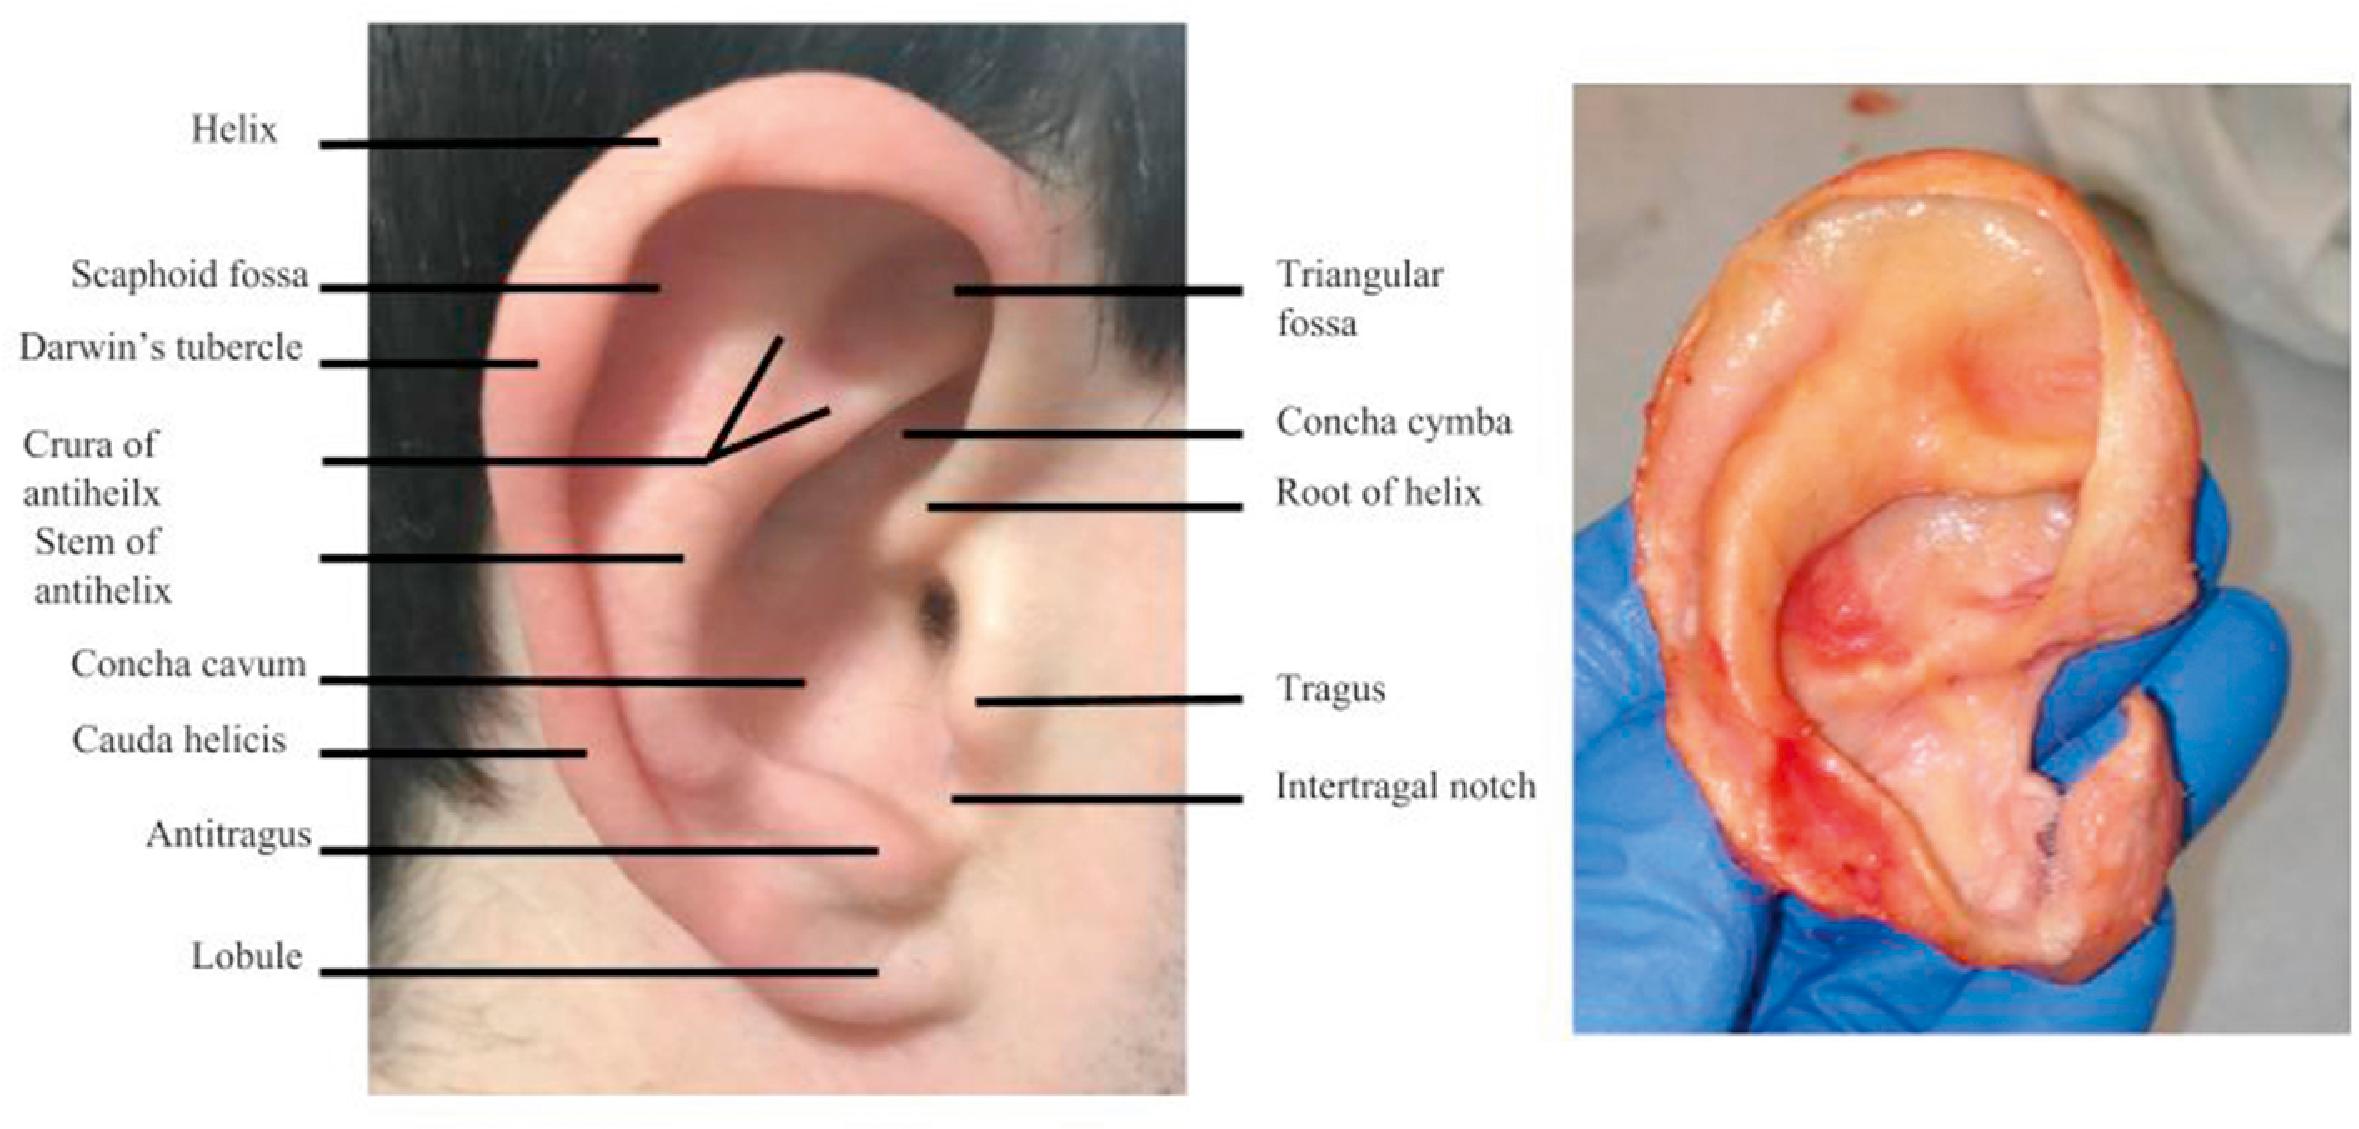 Fig. 18.1, Normal anatomic landmarks of the pinna and underlying cartilage framework.